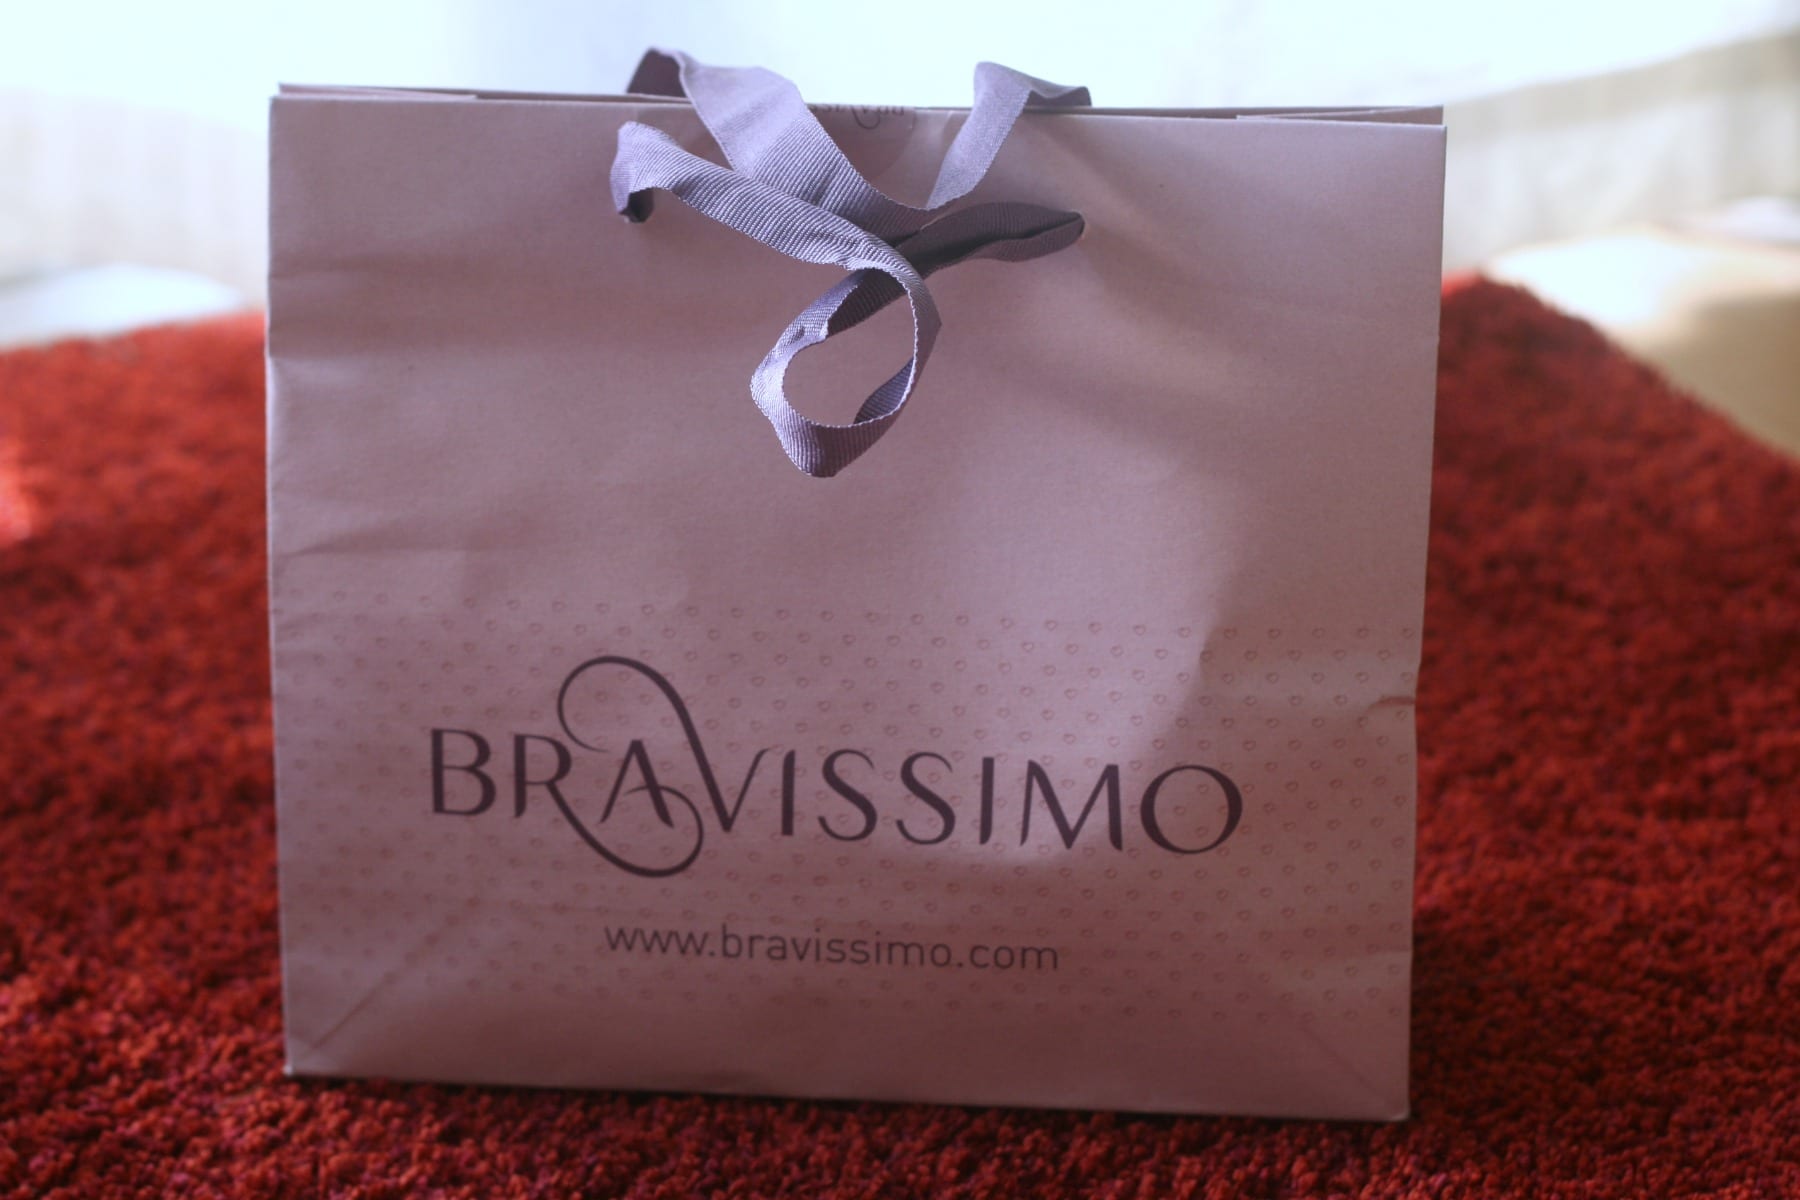 • Brava, Bravissimo • Seattle based fashion and